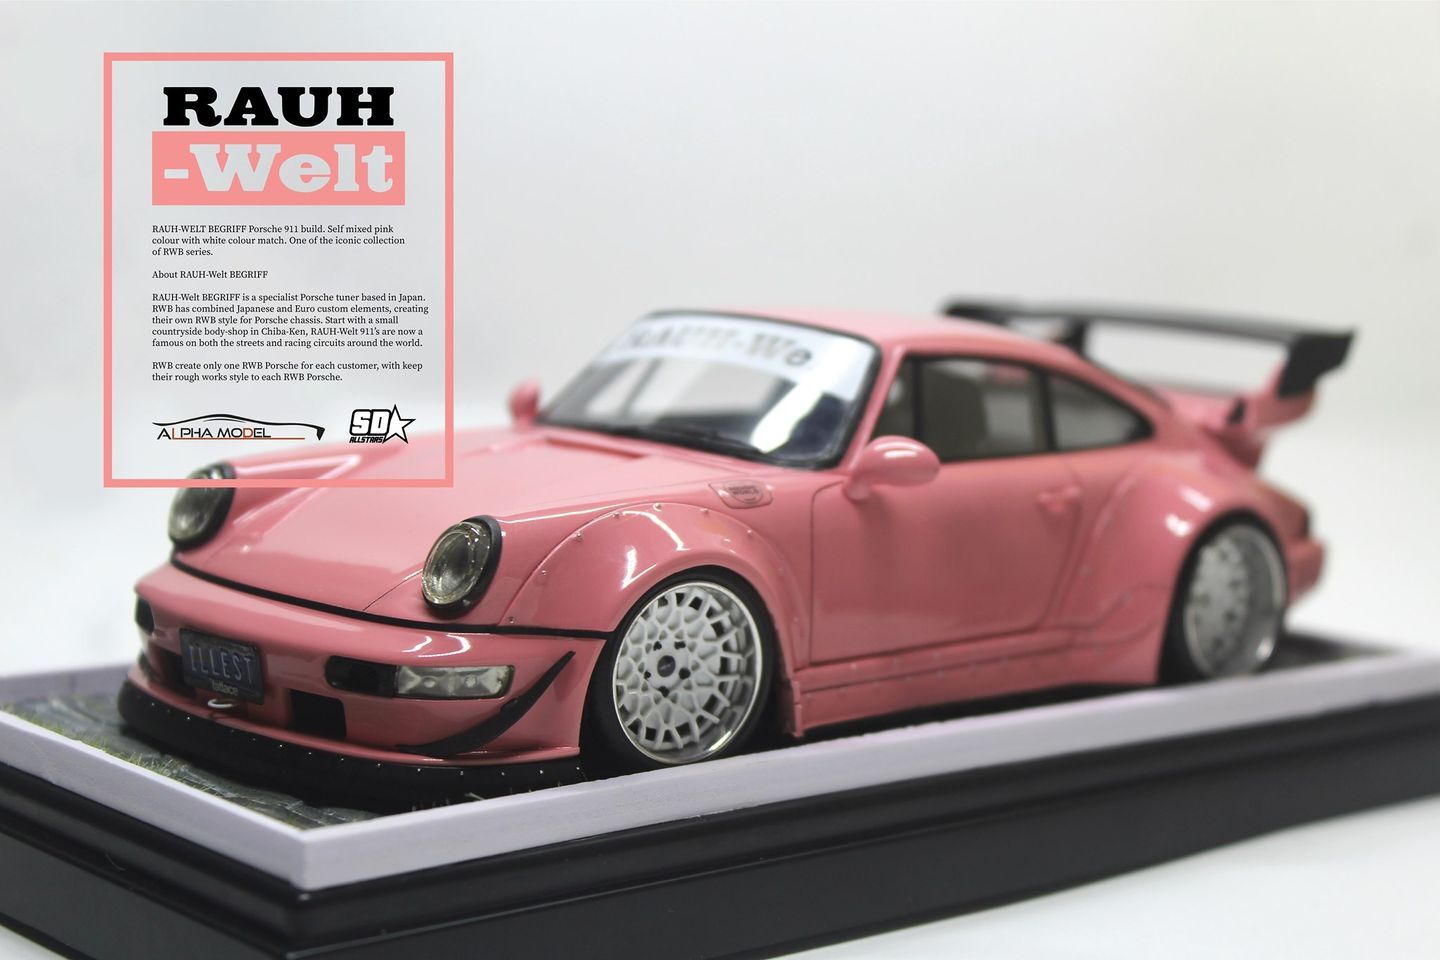 Porsche Model Cars: the Miniature Edition